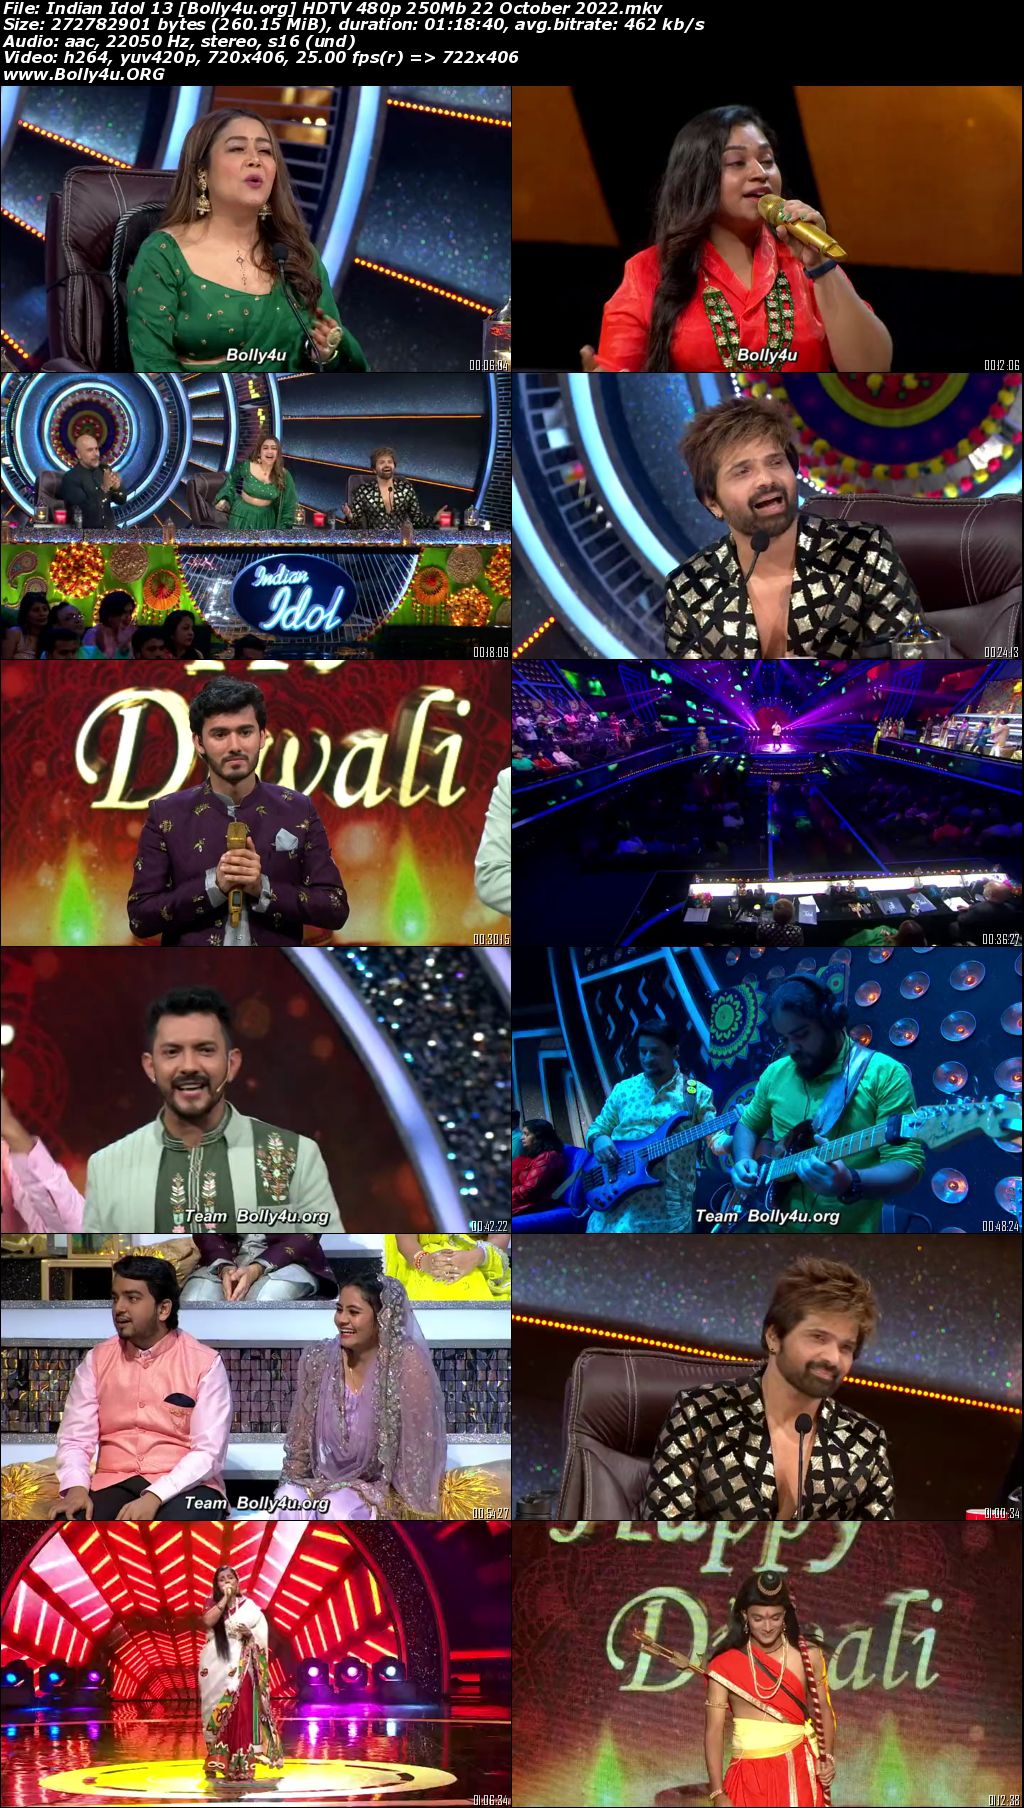 Indian Idol 13 HDTV 480p 250Mb 22 October 2022 Download